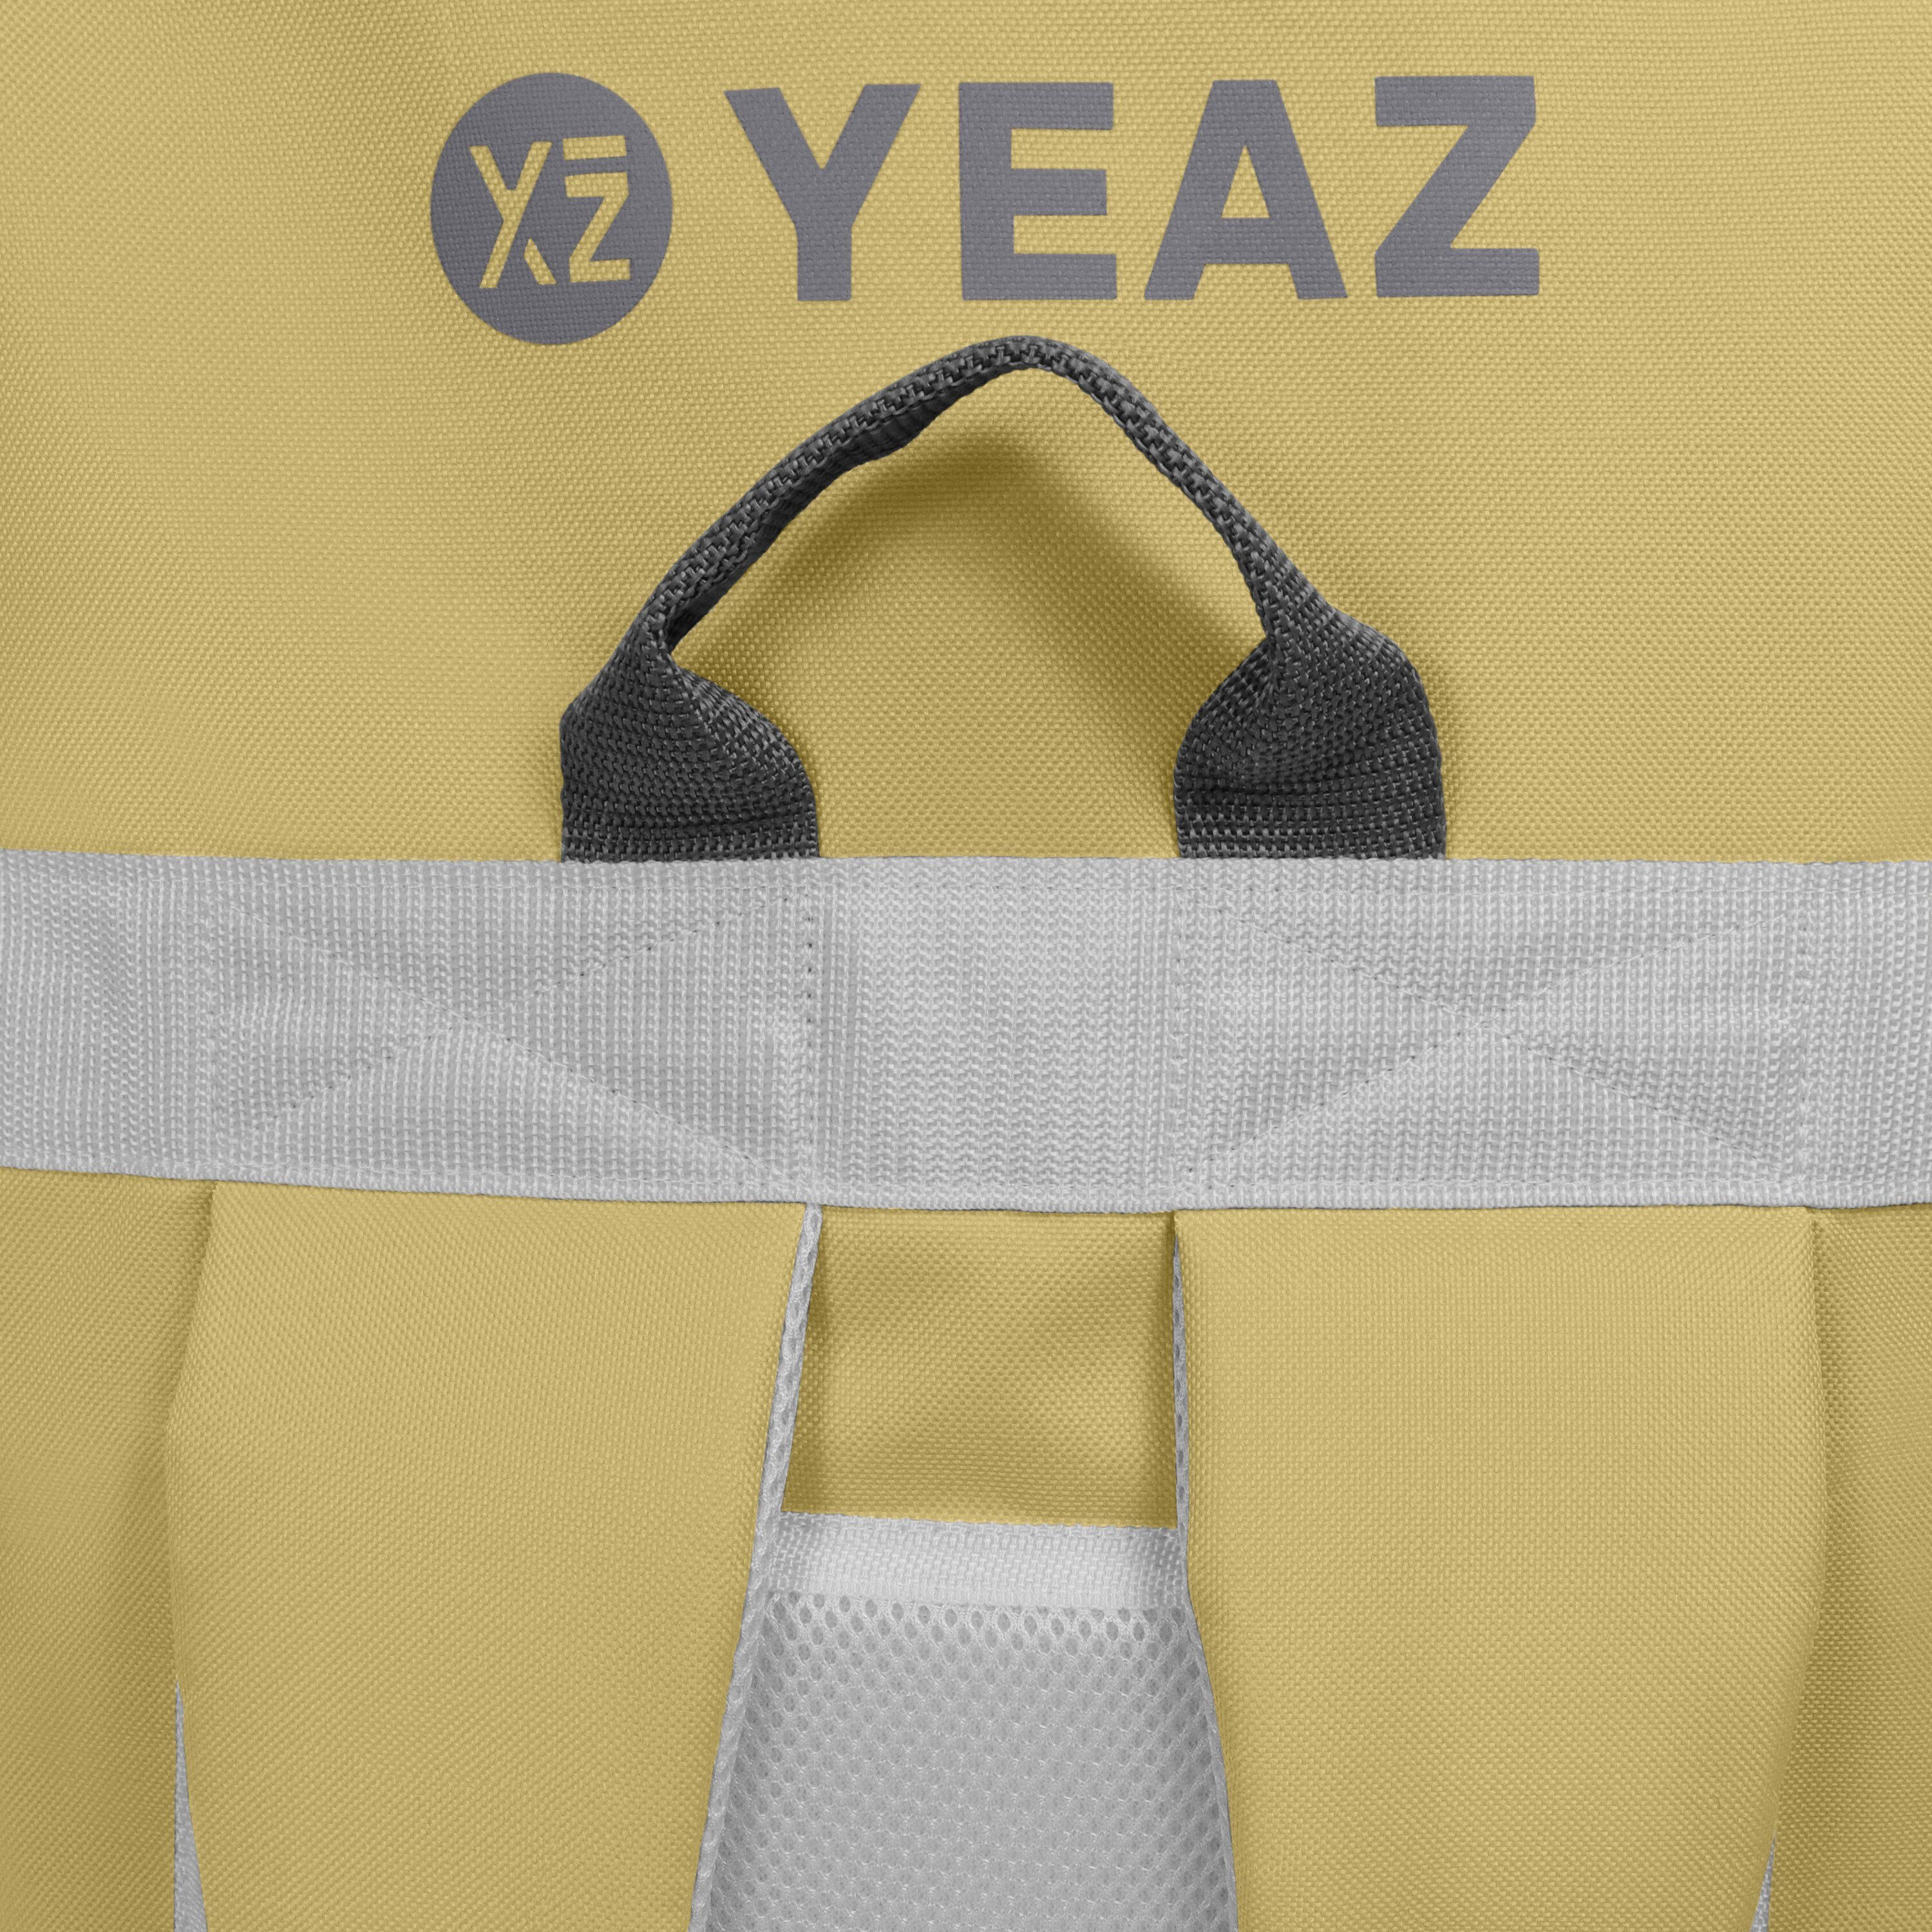 (Set), RIVIERA LE Kollektion. CLUB sup LE Inflatable YEAZ CLUB aus für SUP-Boards rucksack, SUP-Board Rucksack